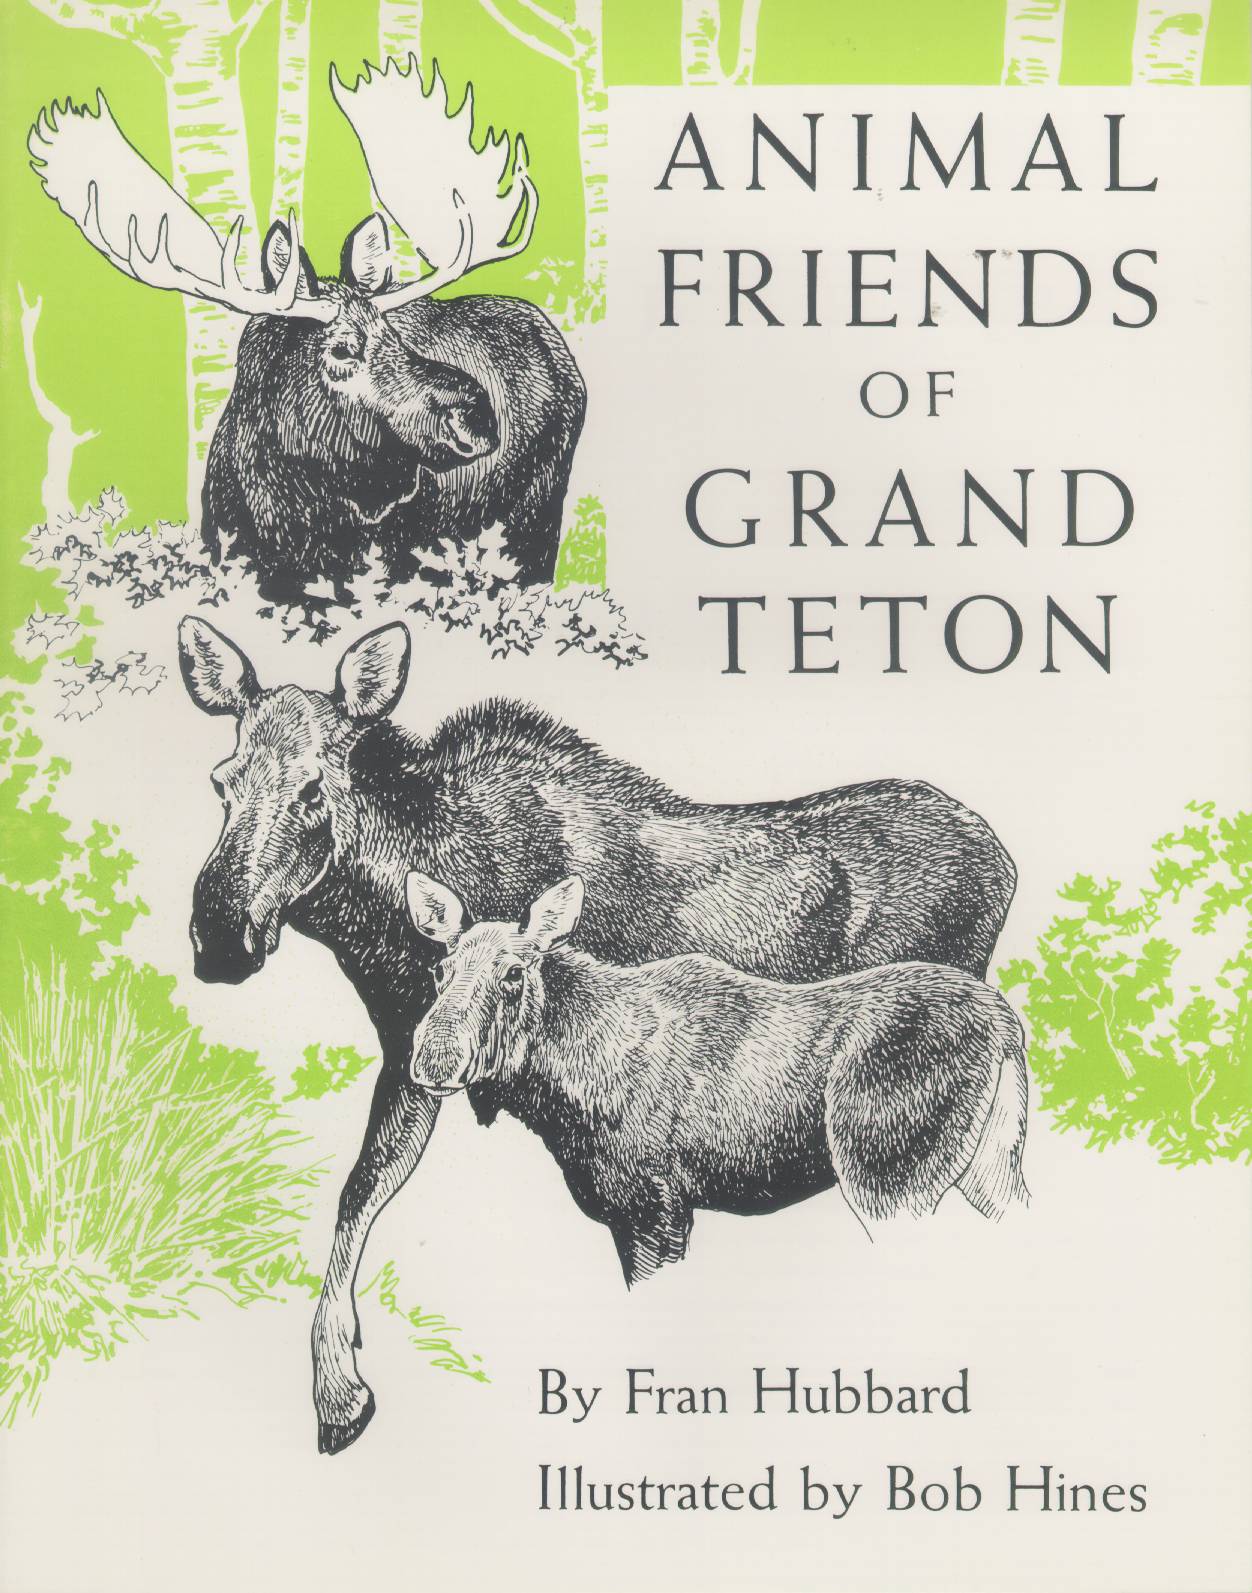 ANIMAL FRIENDS OF GRAND TETON.